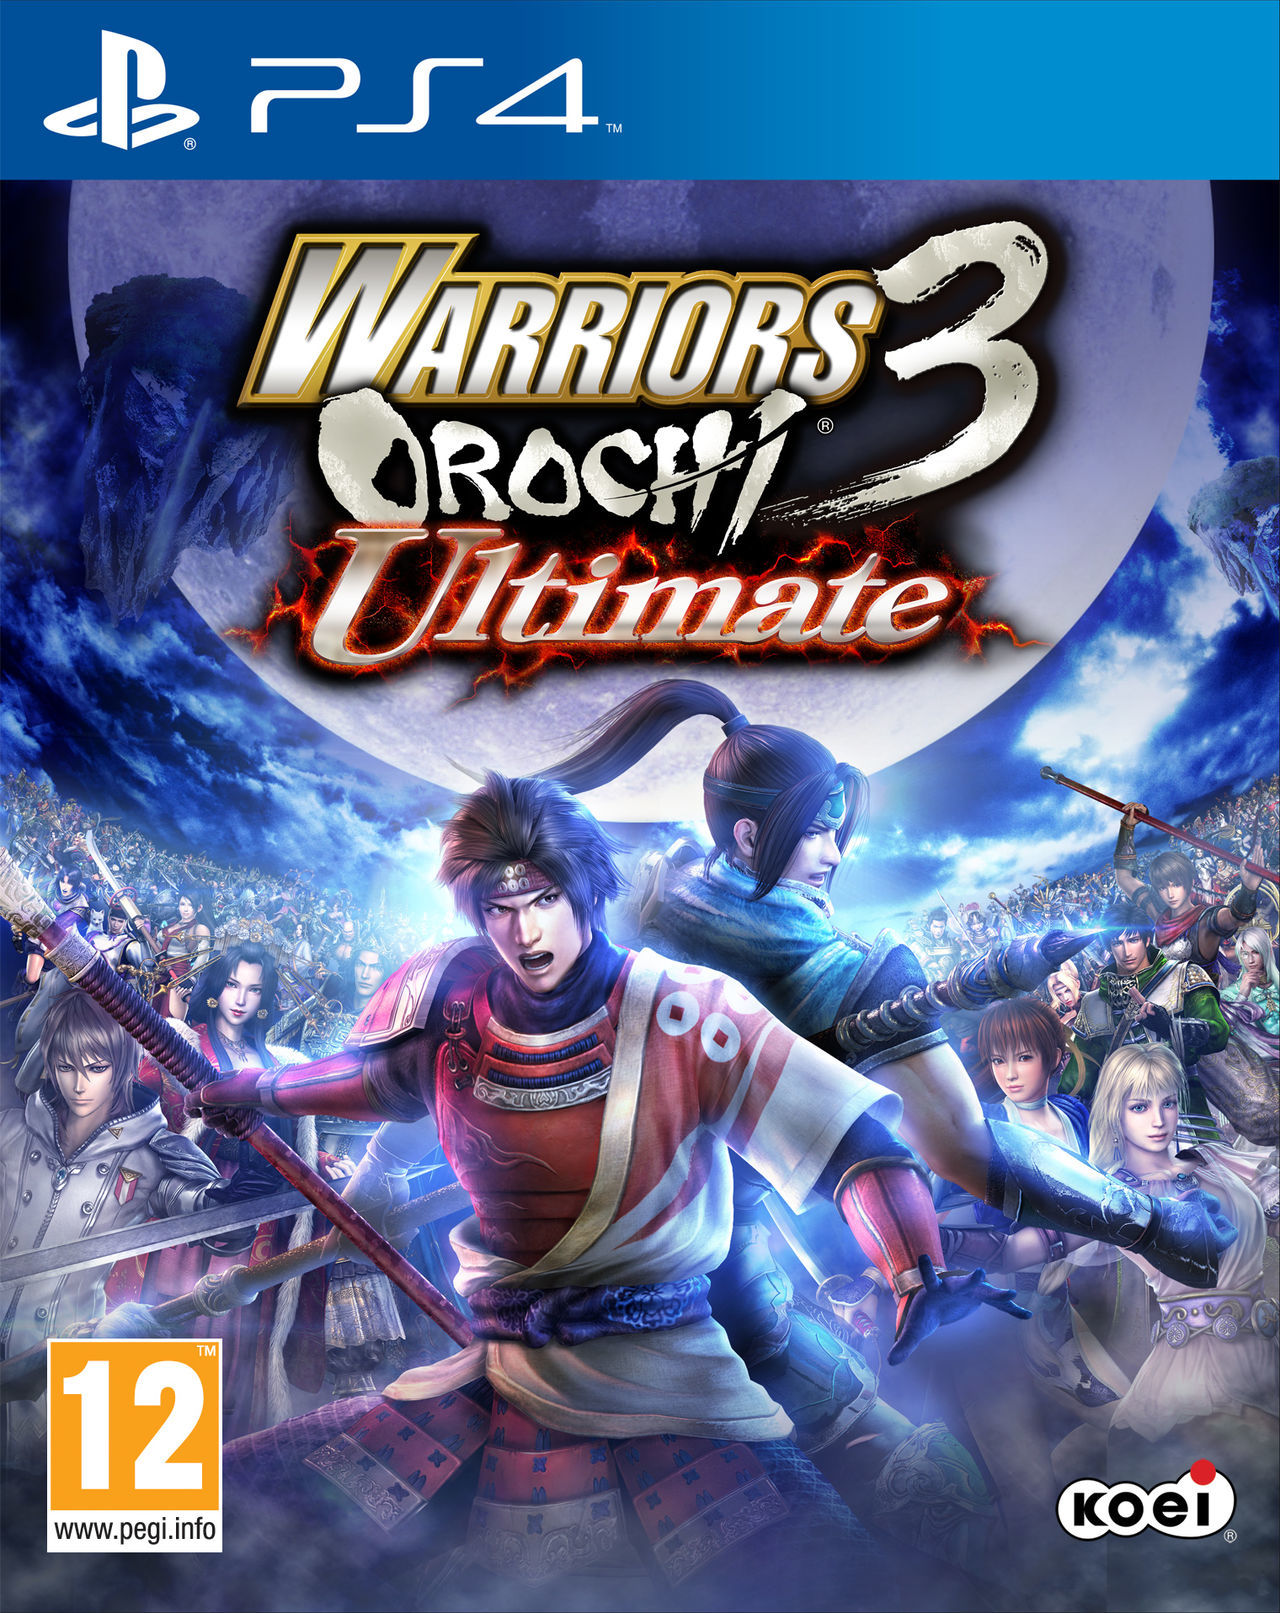 warriors orochi 3 ultimate switch